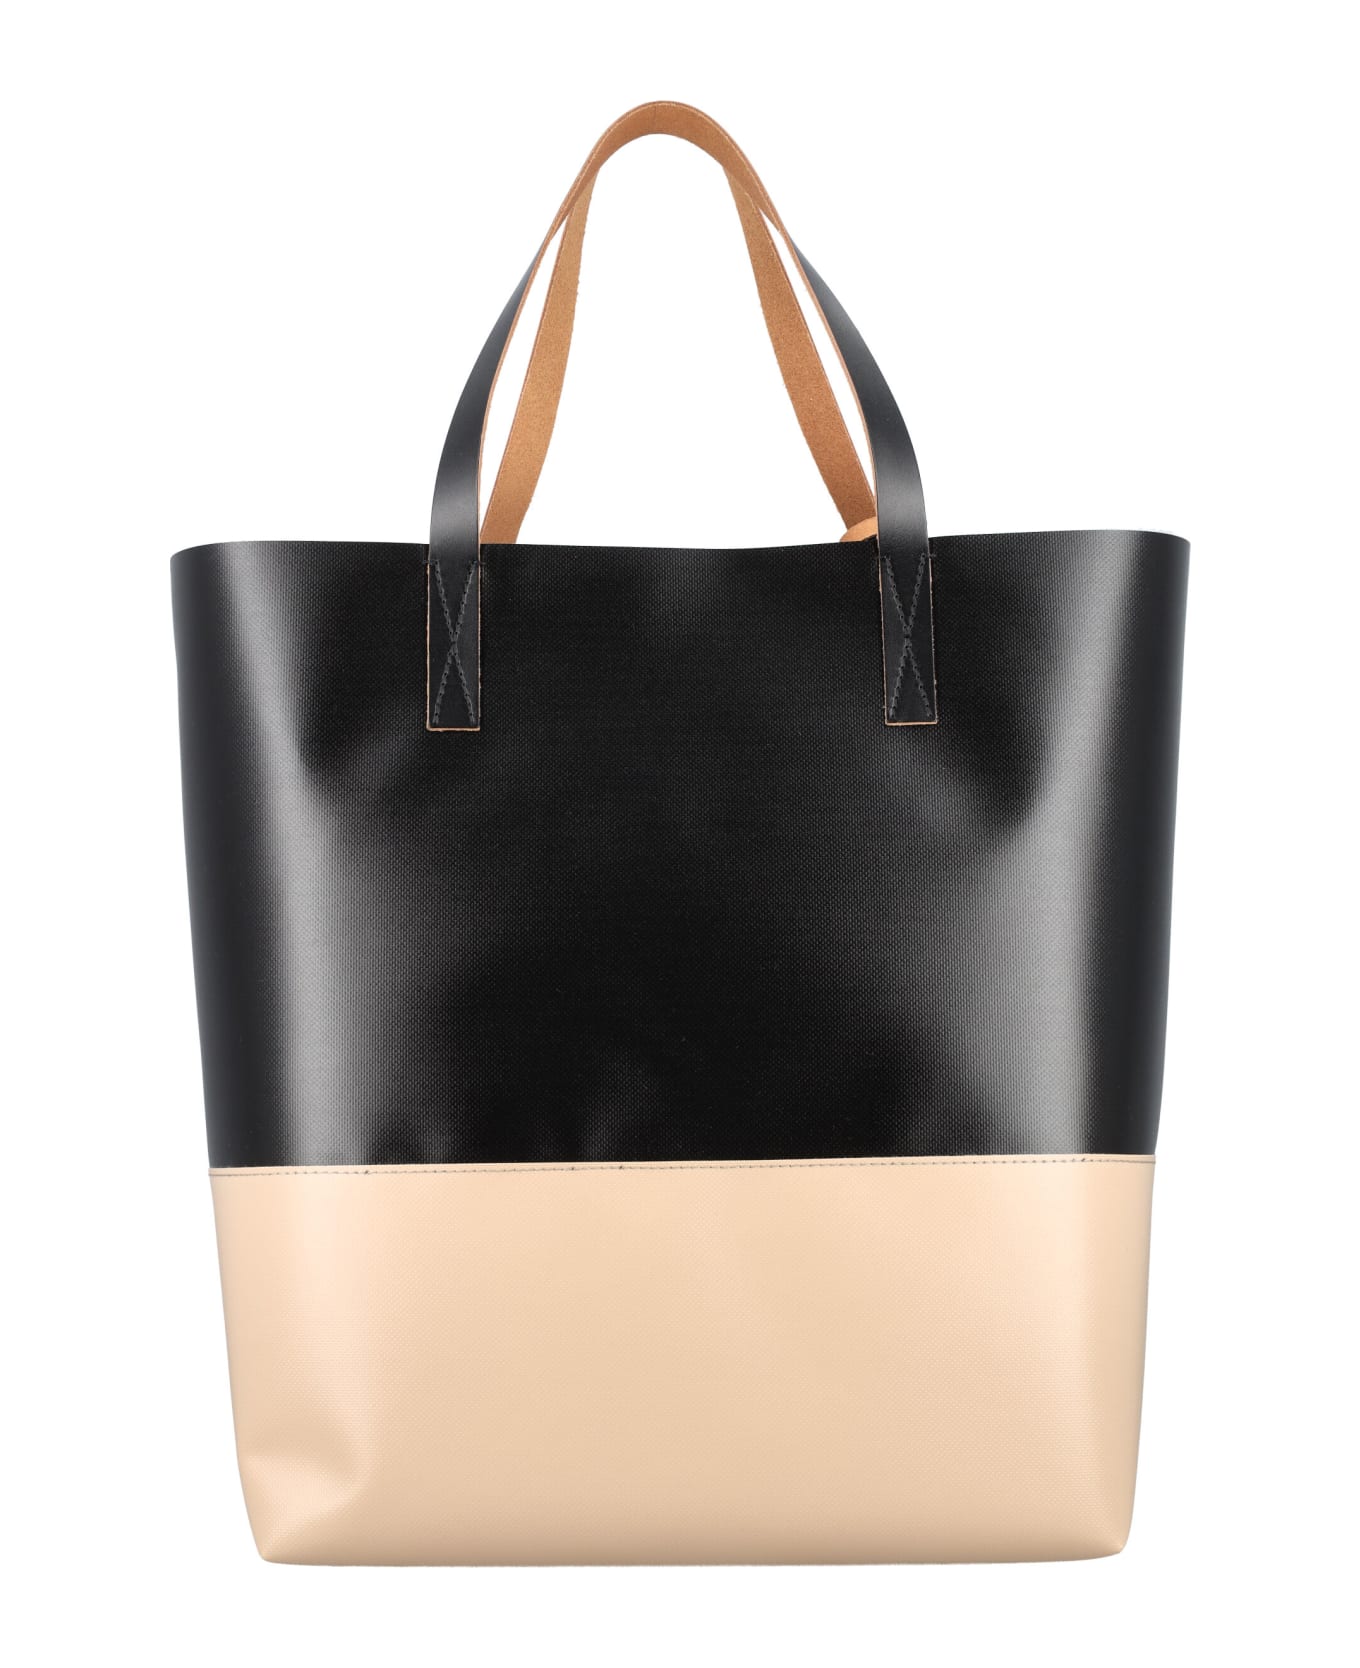 Marni Tribeca Shopping Bag - BLACK CORK